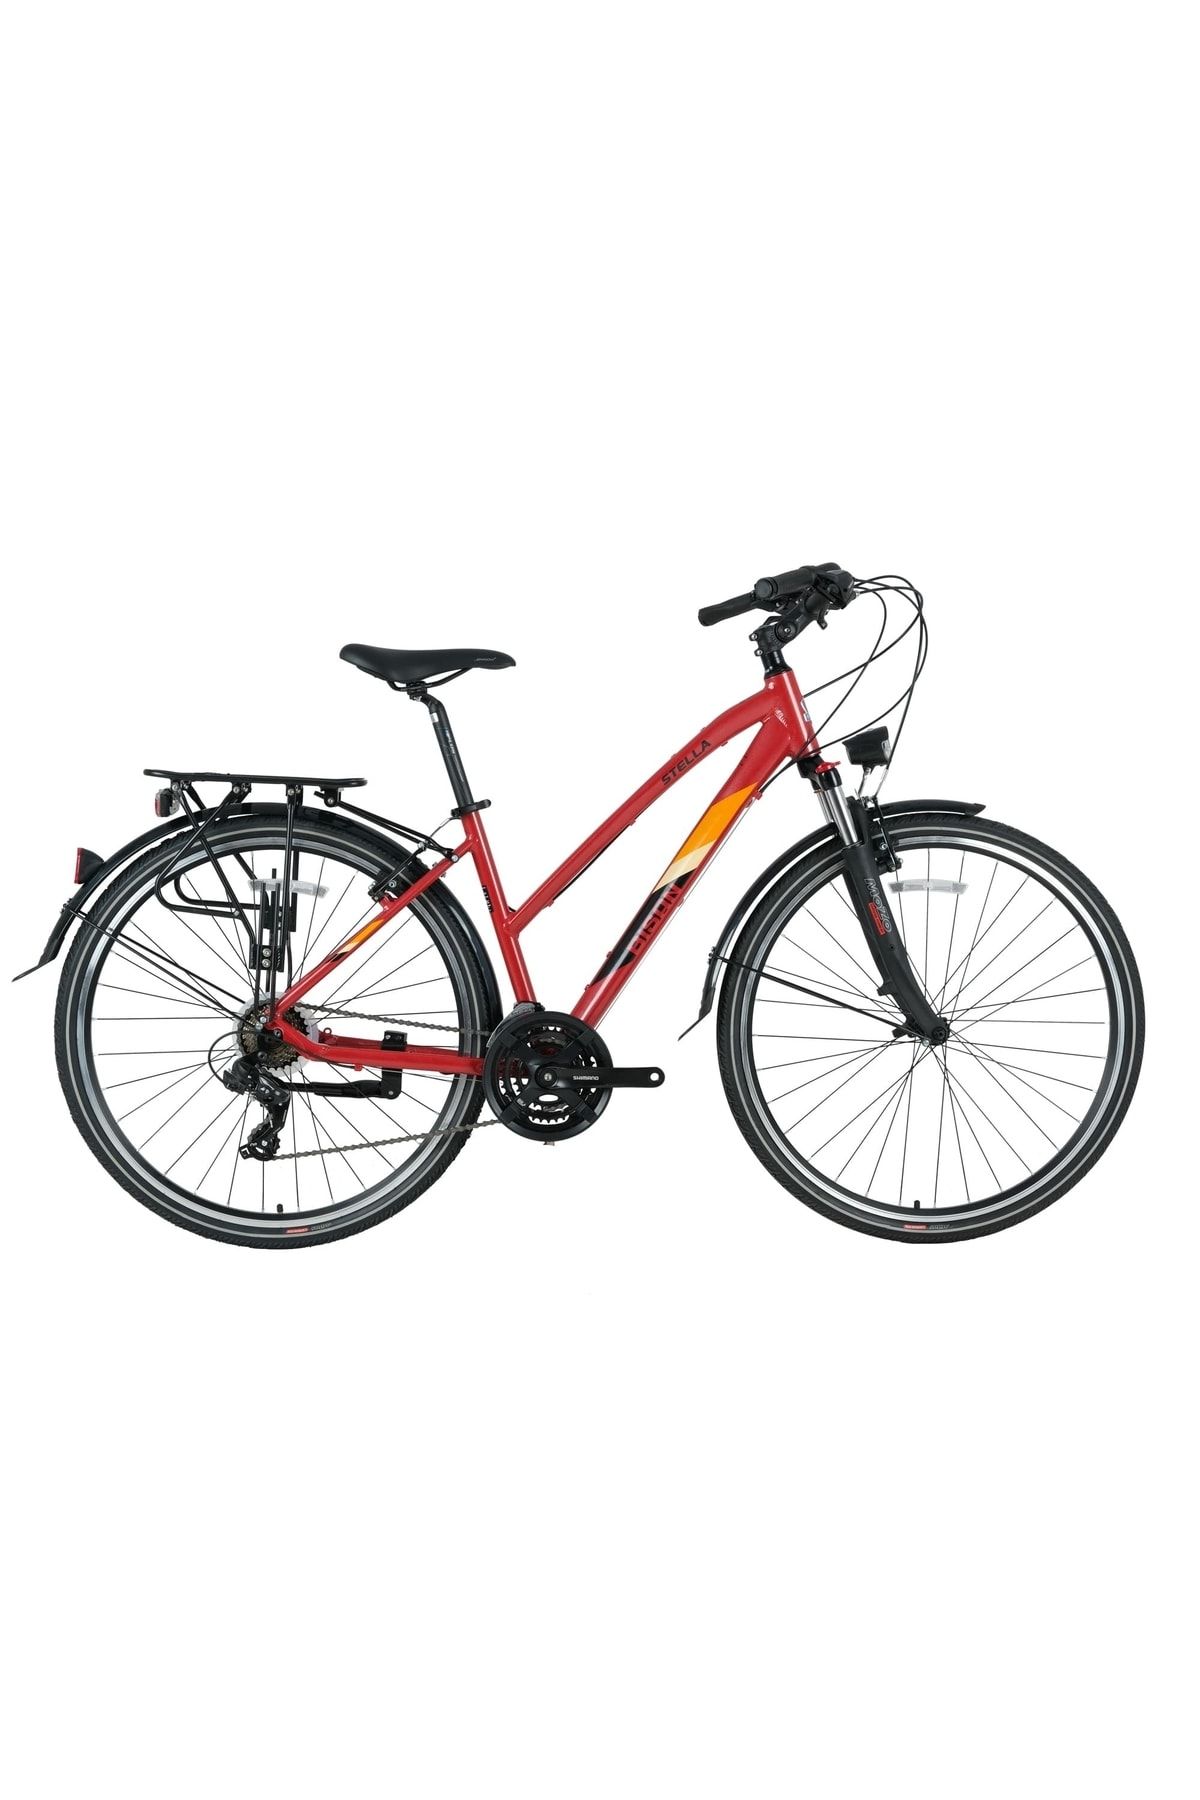 Bisan Stella City- Alüminyum Trekking Şehir Bisikleti 45cm 17.5 Inç 21 Vites Onay Bisiklet 2022